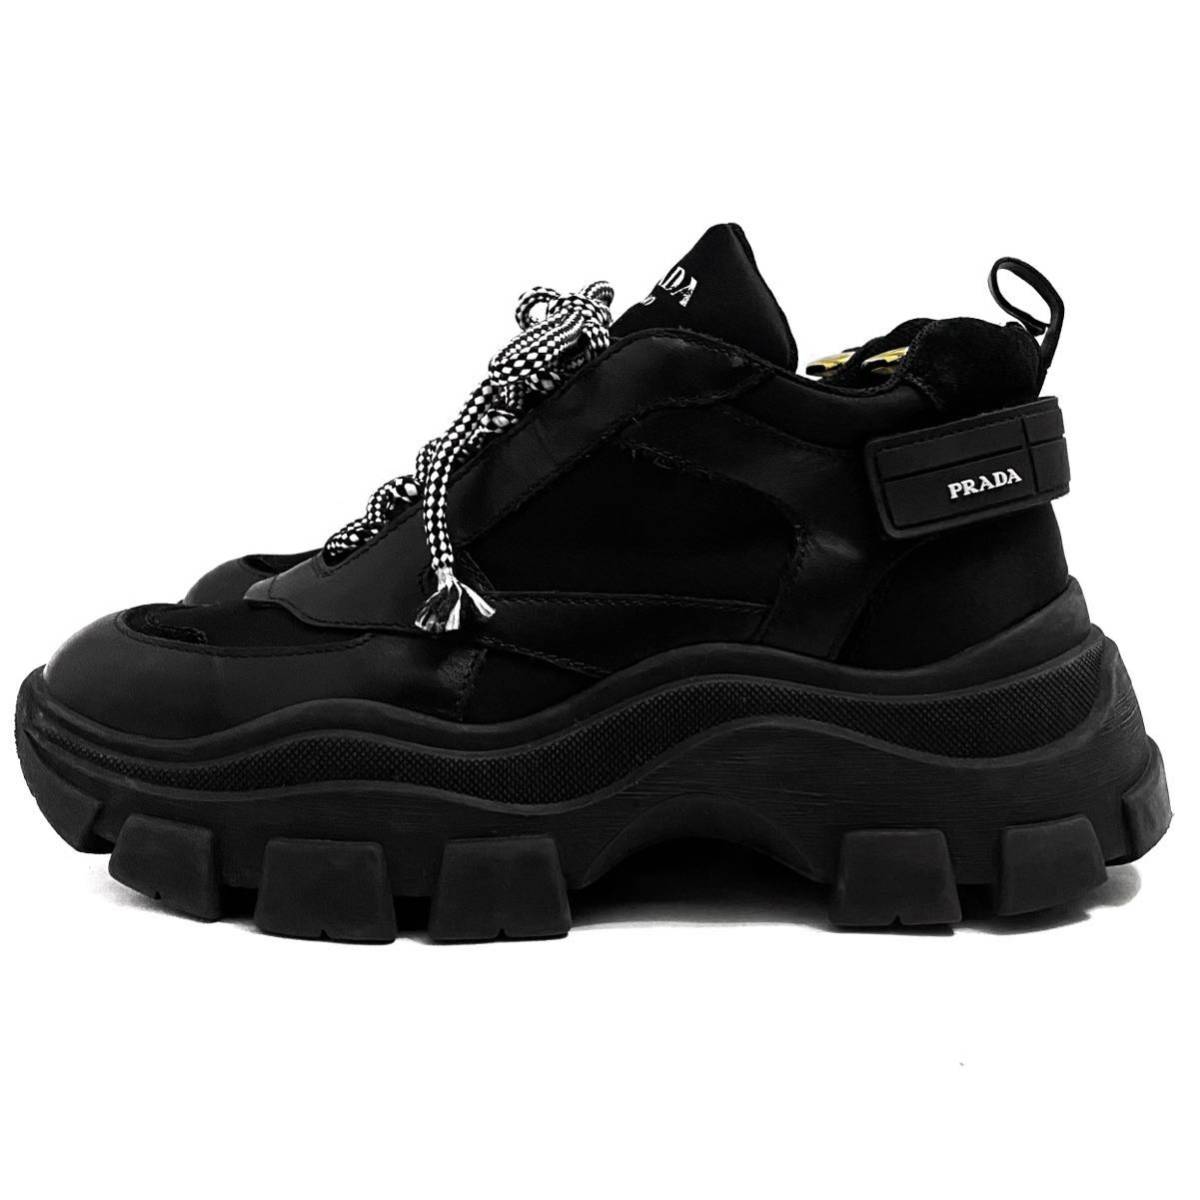 PRADA プラダ ペガサス ブロック スニーカー ブーツ レザー 本革 シューズ 靴 ブラック 黒 サイズ 8 1/2 27.5cm前後 メンズ  正規品